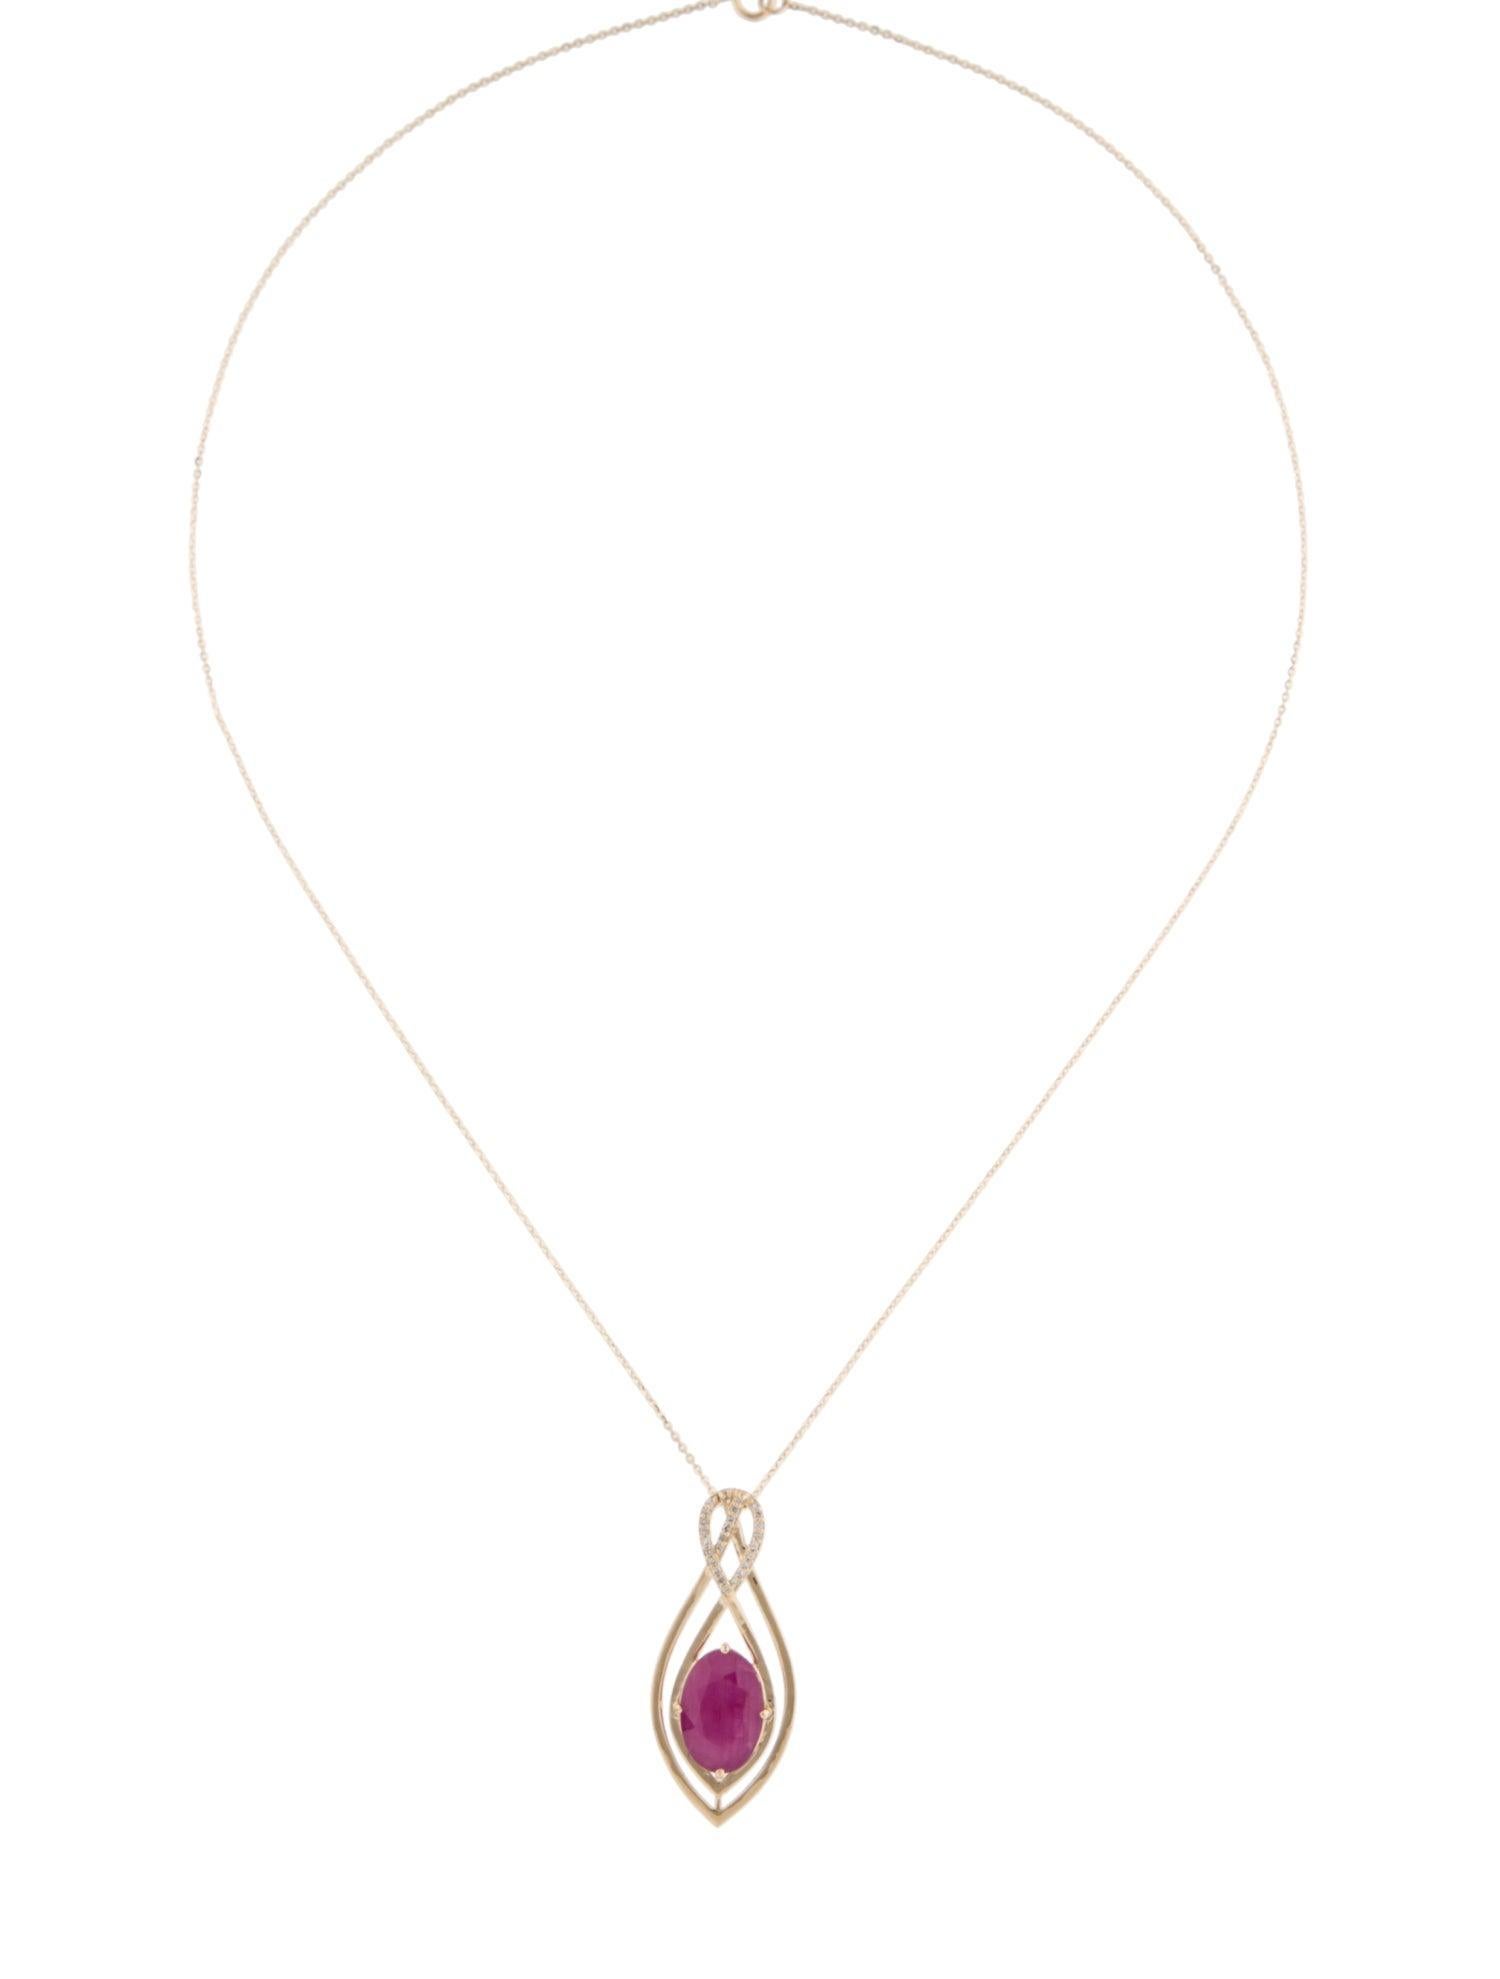 Women's Exquisite 14K Ruby & Diamond Pendant Necklace  4.07ct Gemstone Sparkle For Sale